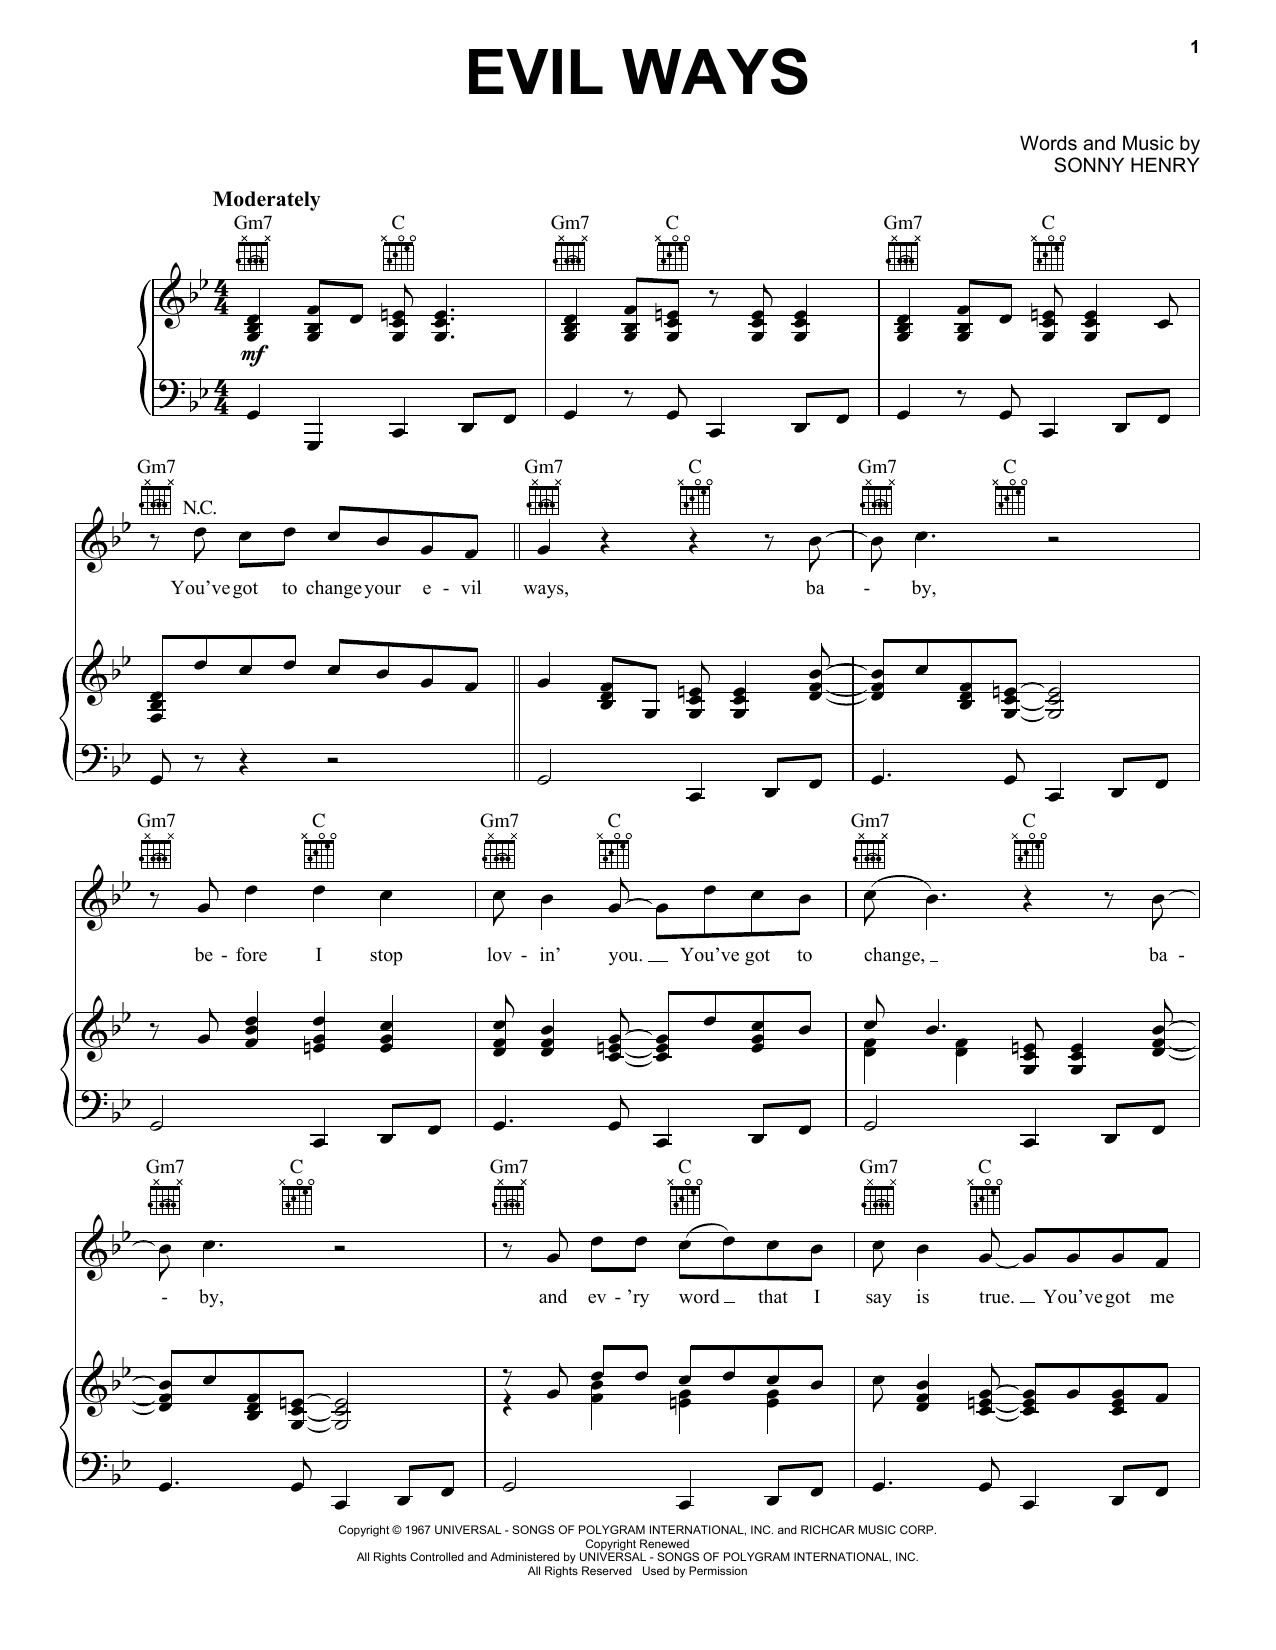 Santana Evil Ways Sheet Music Notes & Chords for Guitar Tab - Download or Print PDF